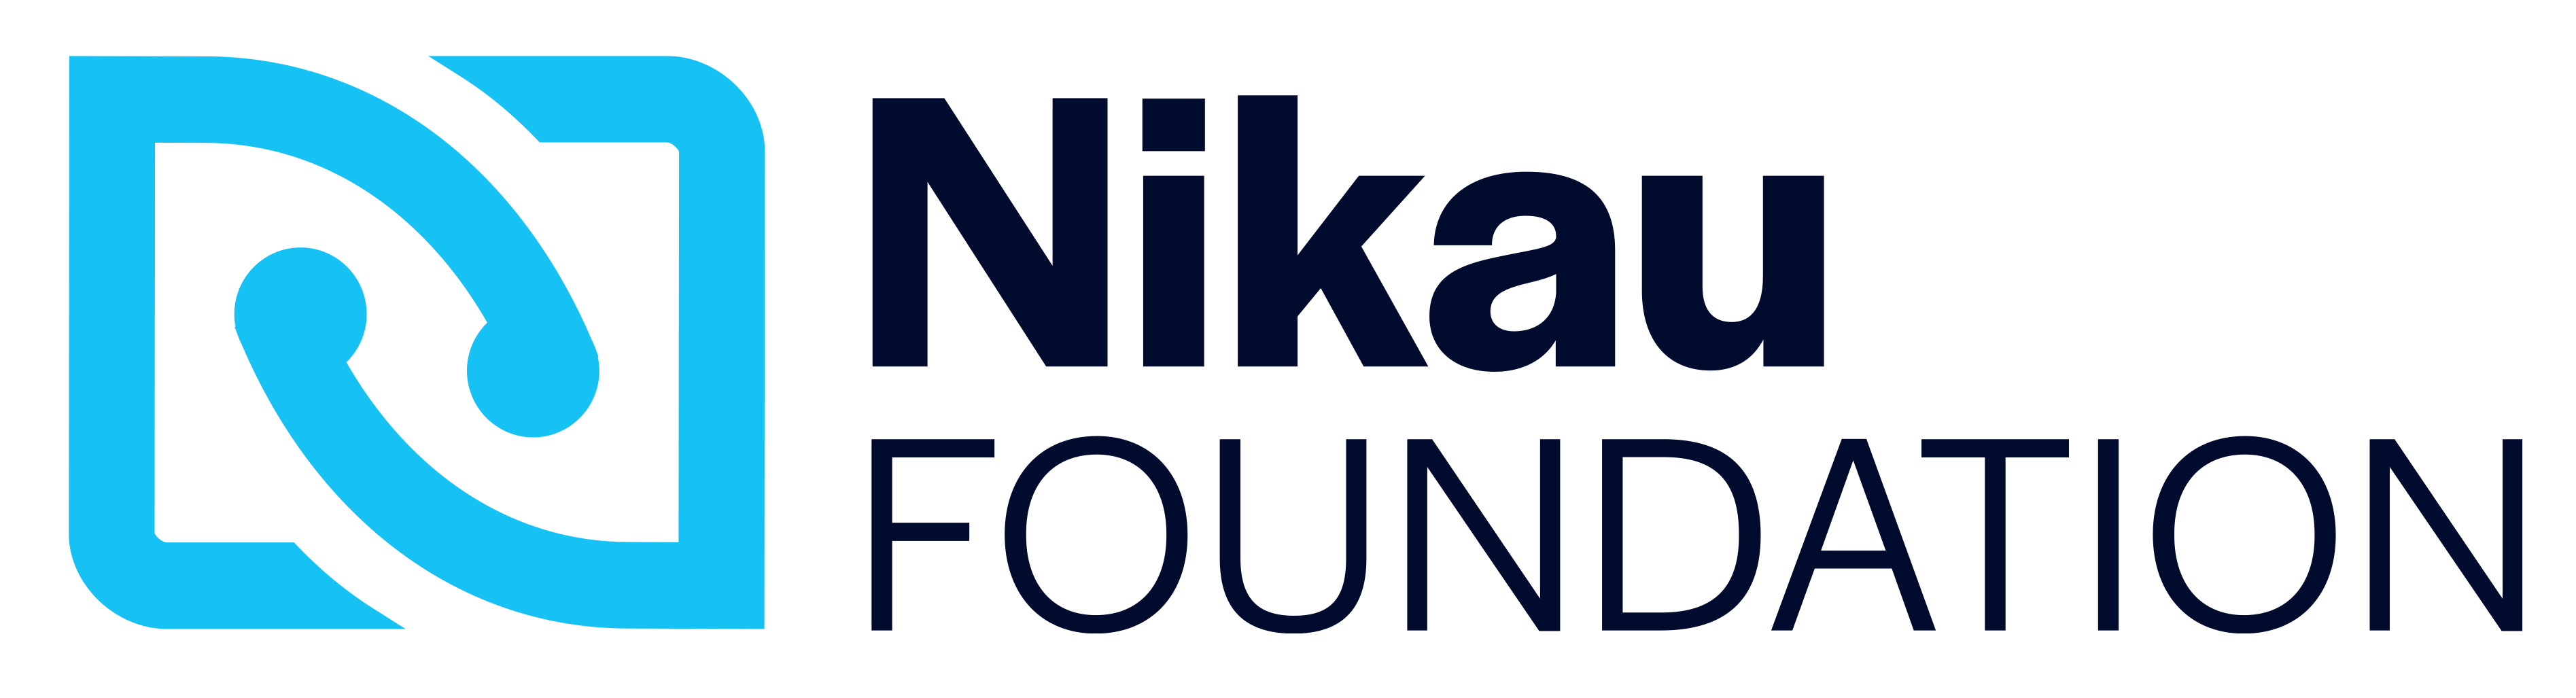 Nikau Foundation